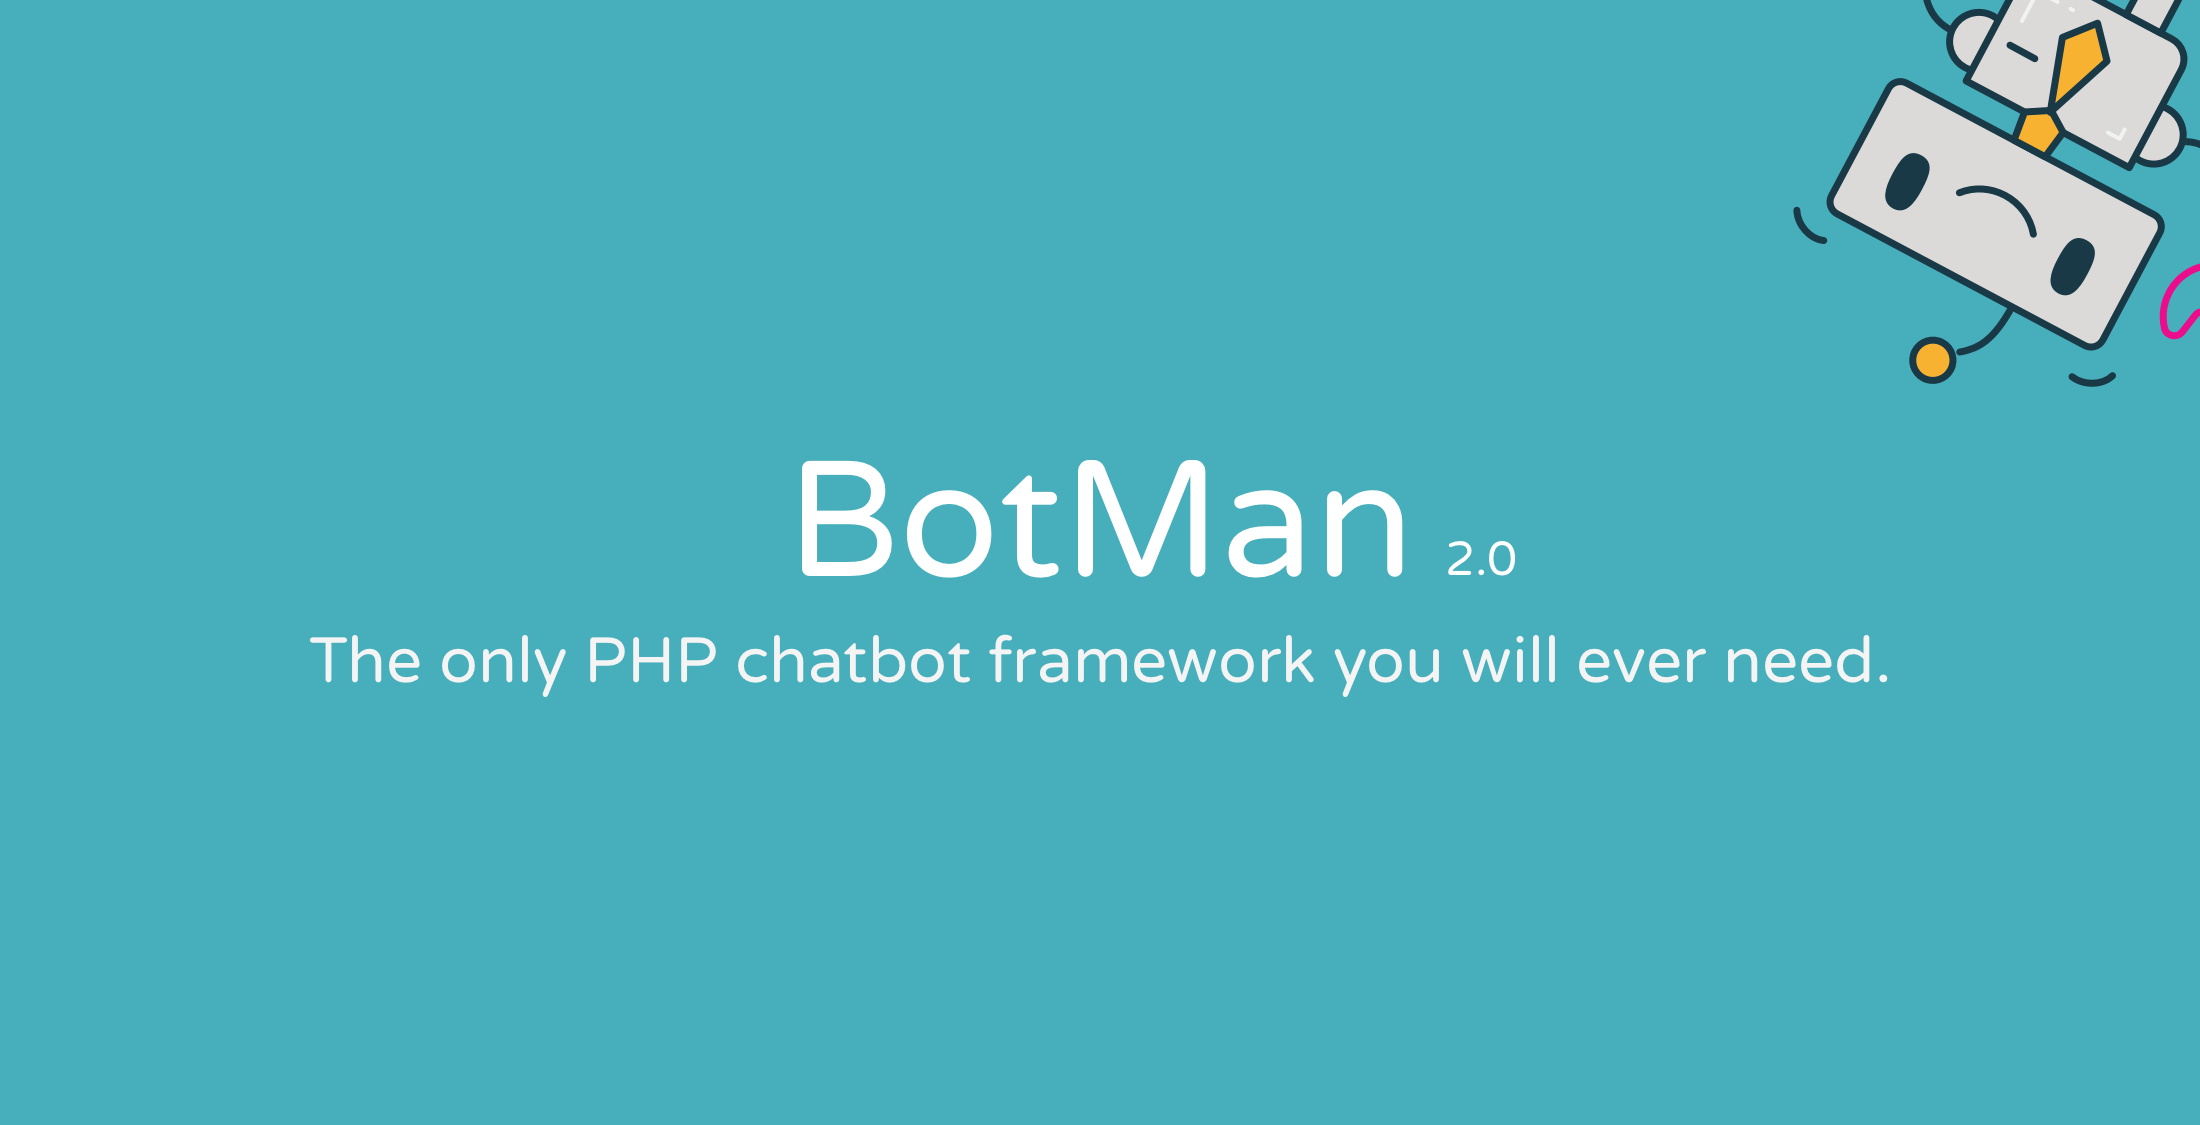 BotMan 2.0 PHP Chatbot Framework image